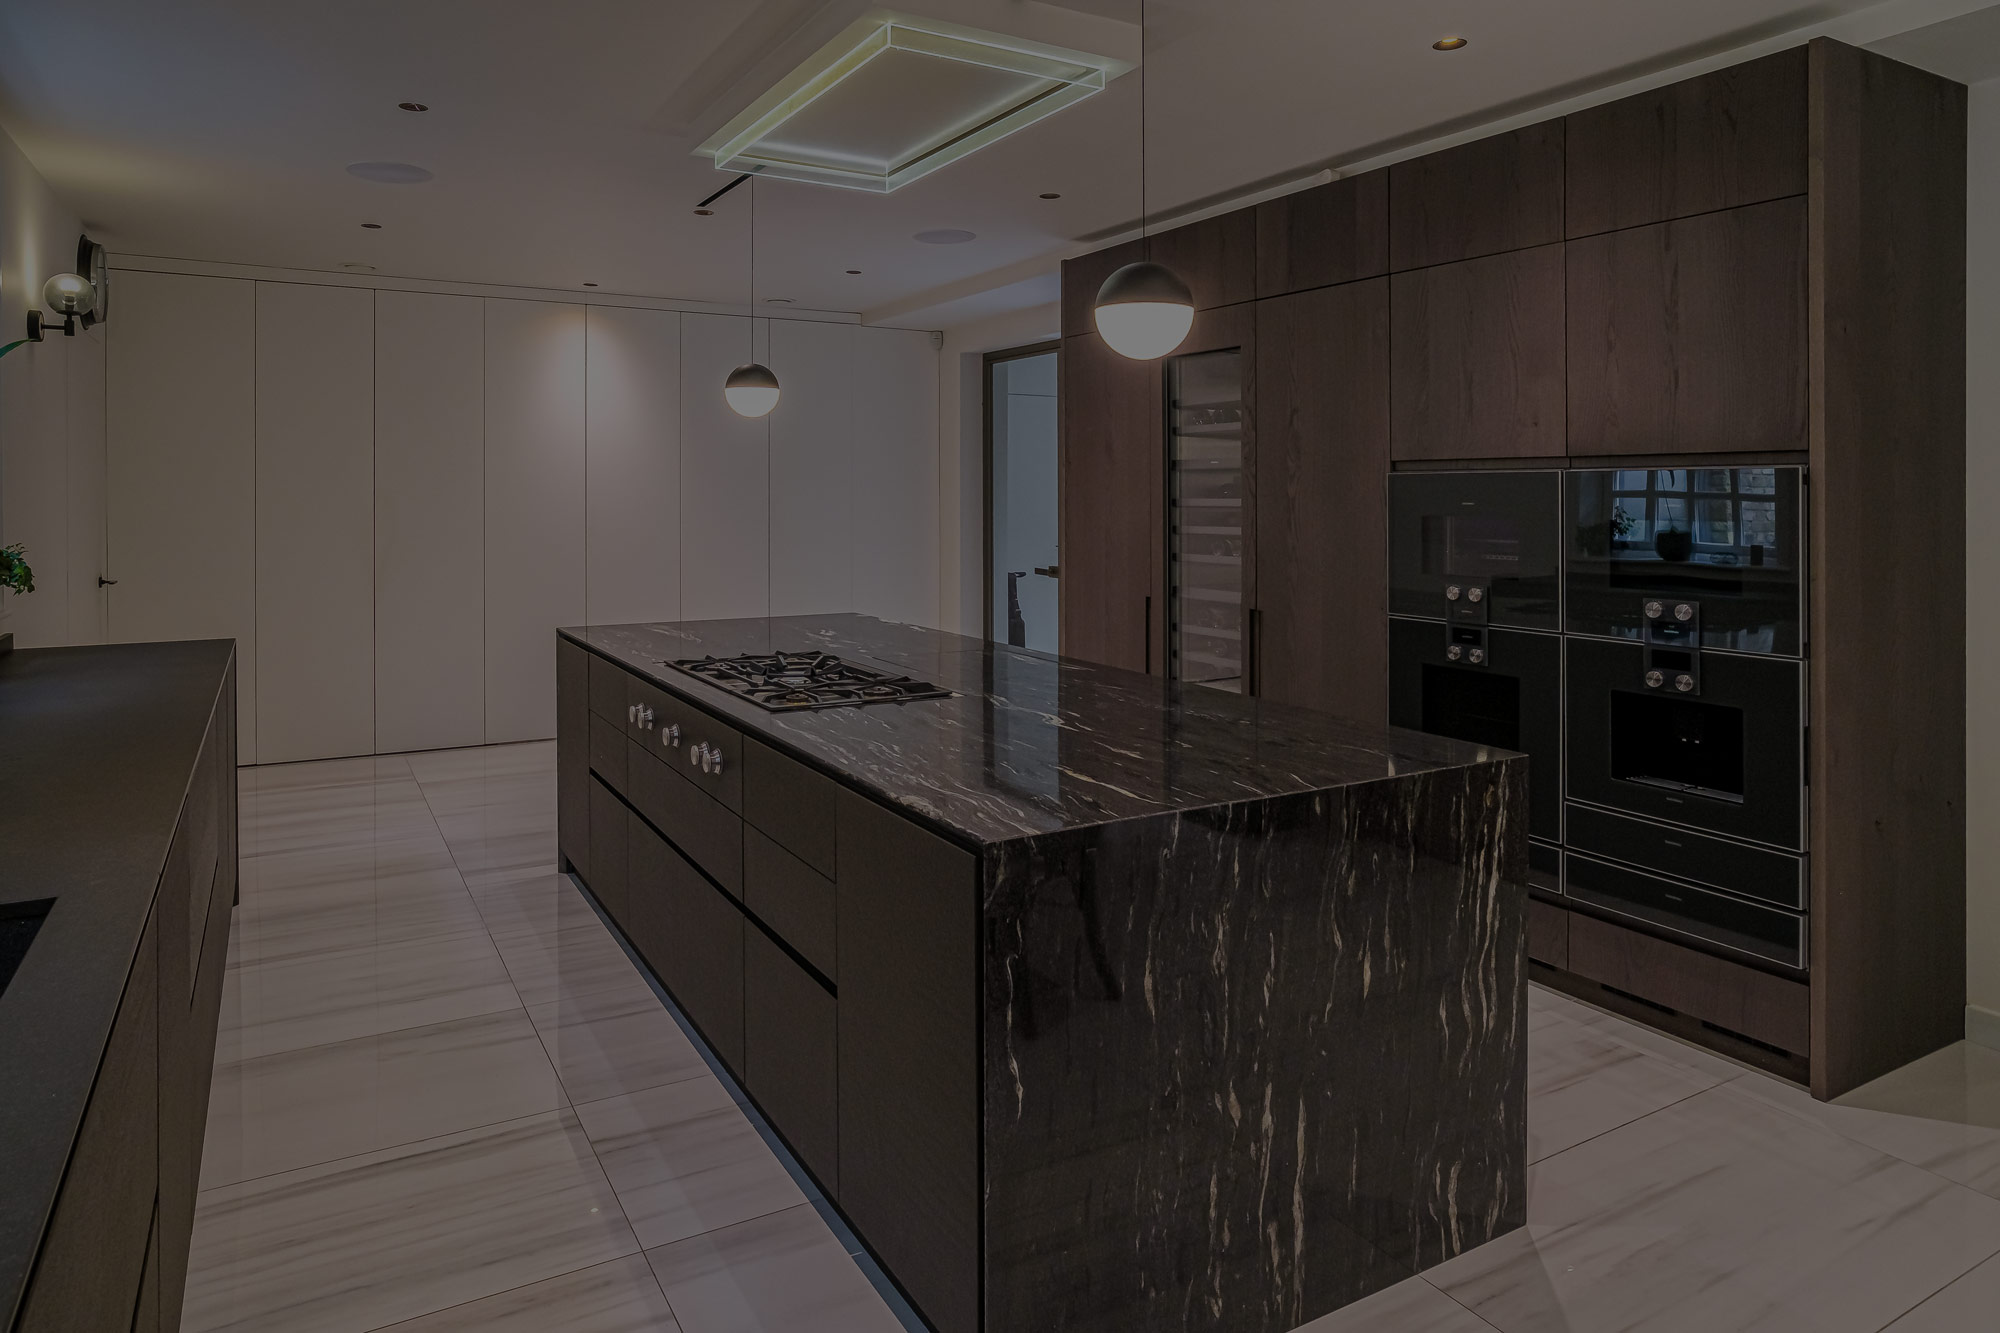 Bespoke contemporary kitchen by Fontana in Loughton Kitchen Video | Design as Art | interior architectural design studio